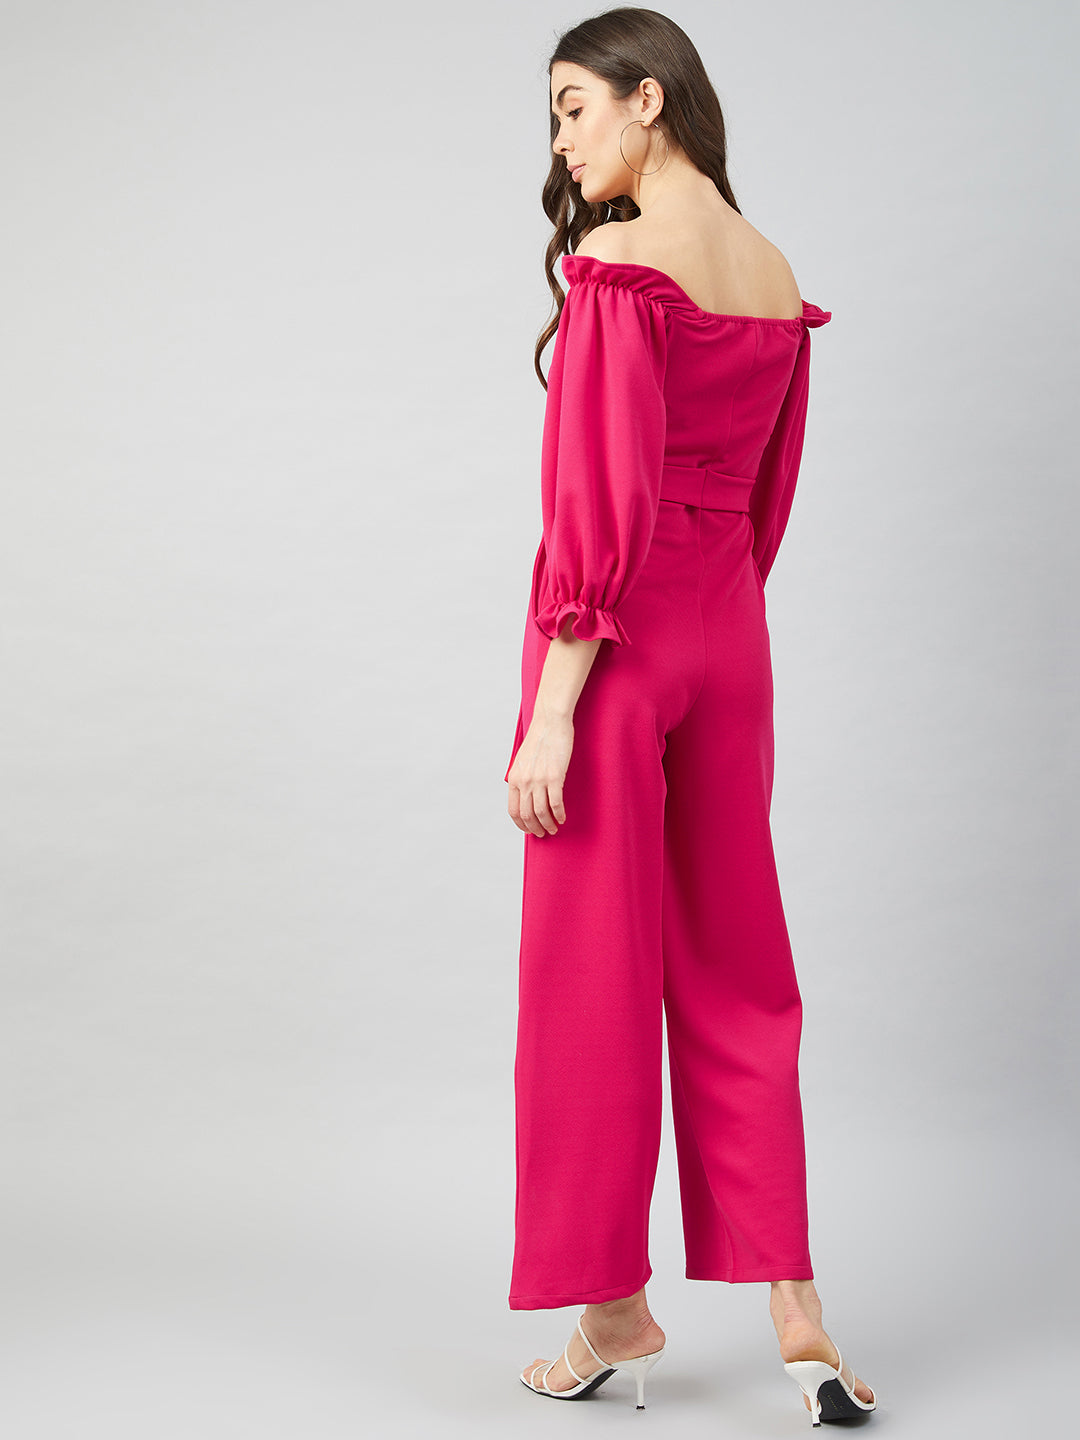 Athena Women Fuchsia Pink Solid Jumpsuit - Athena Lifestyle